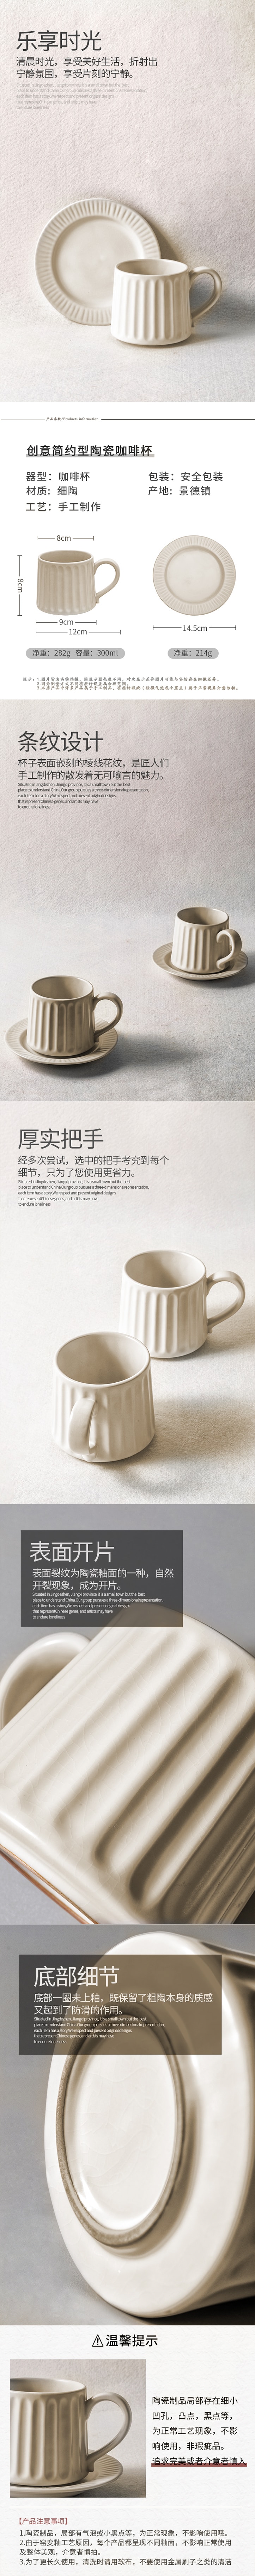 NESTLADY 創意簡約陶瓷咖啡杯